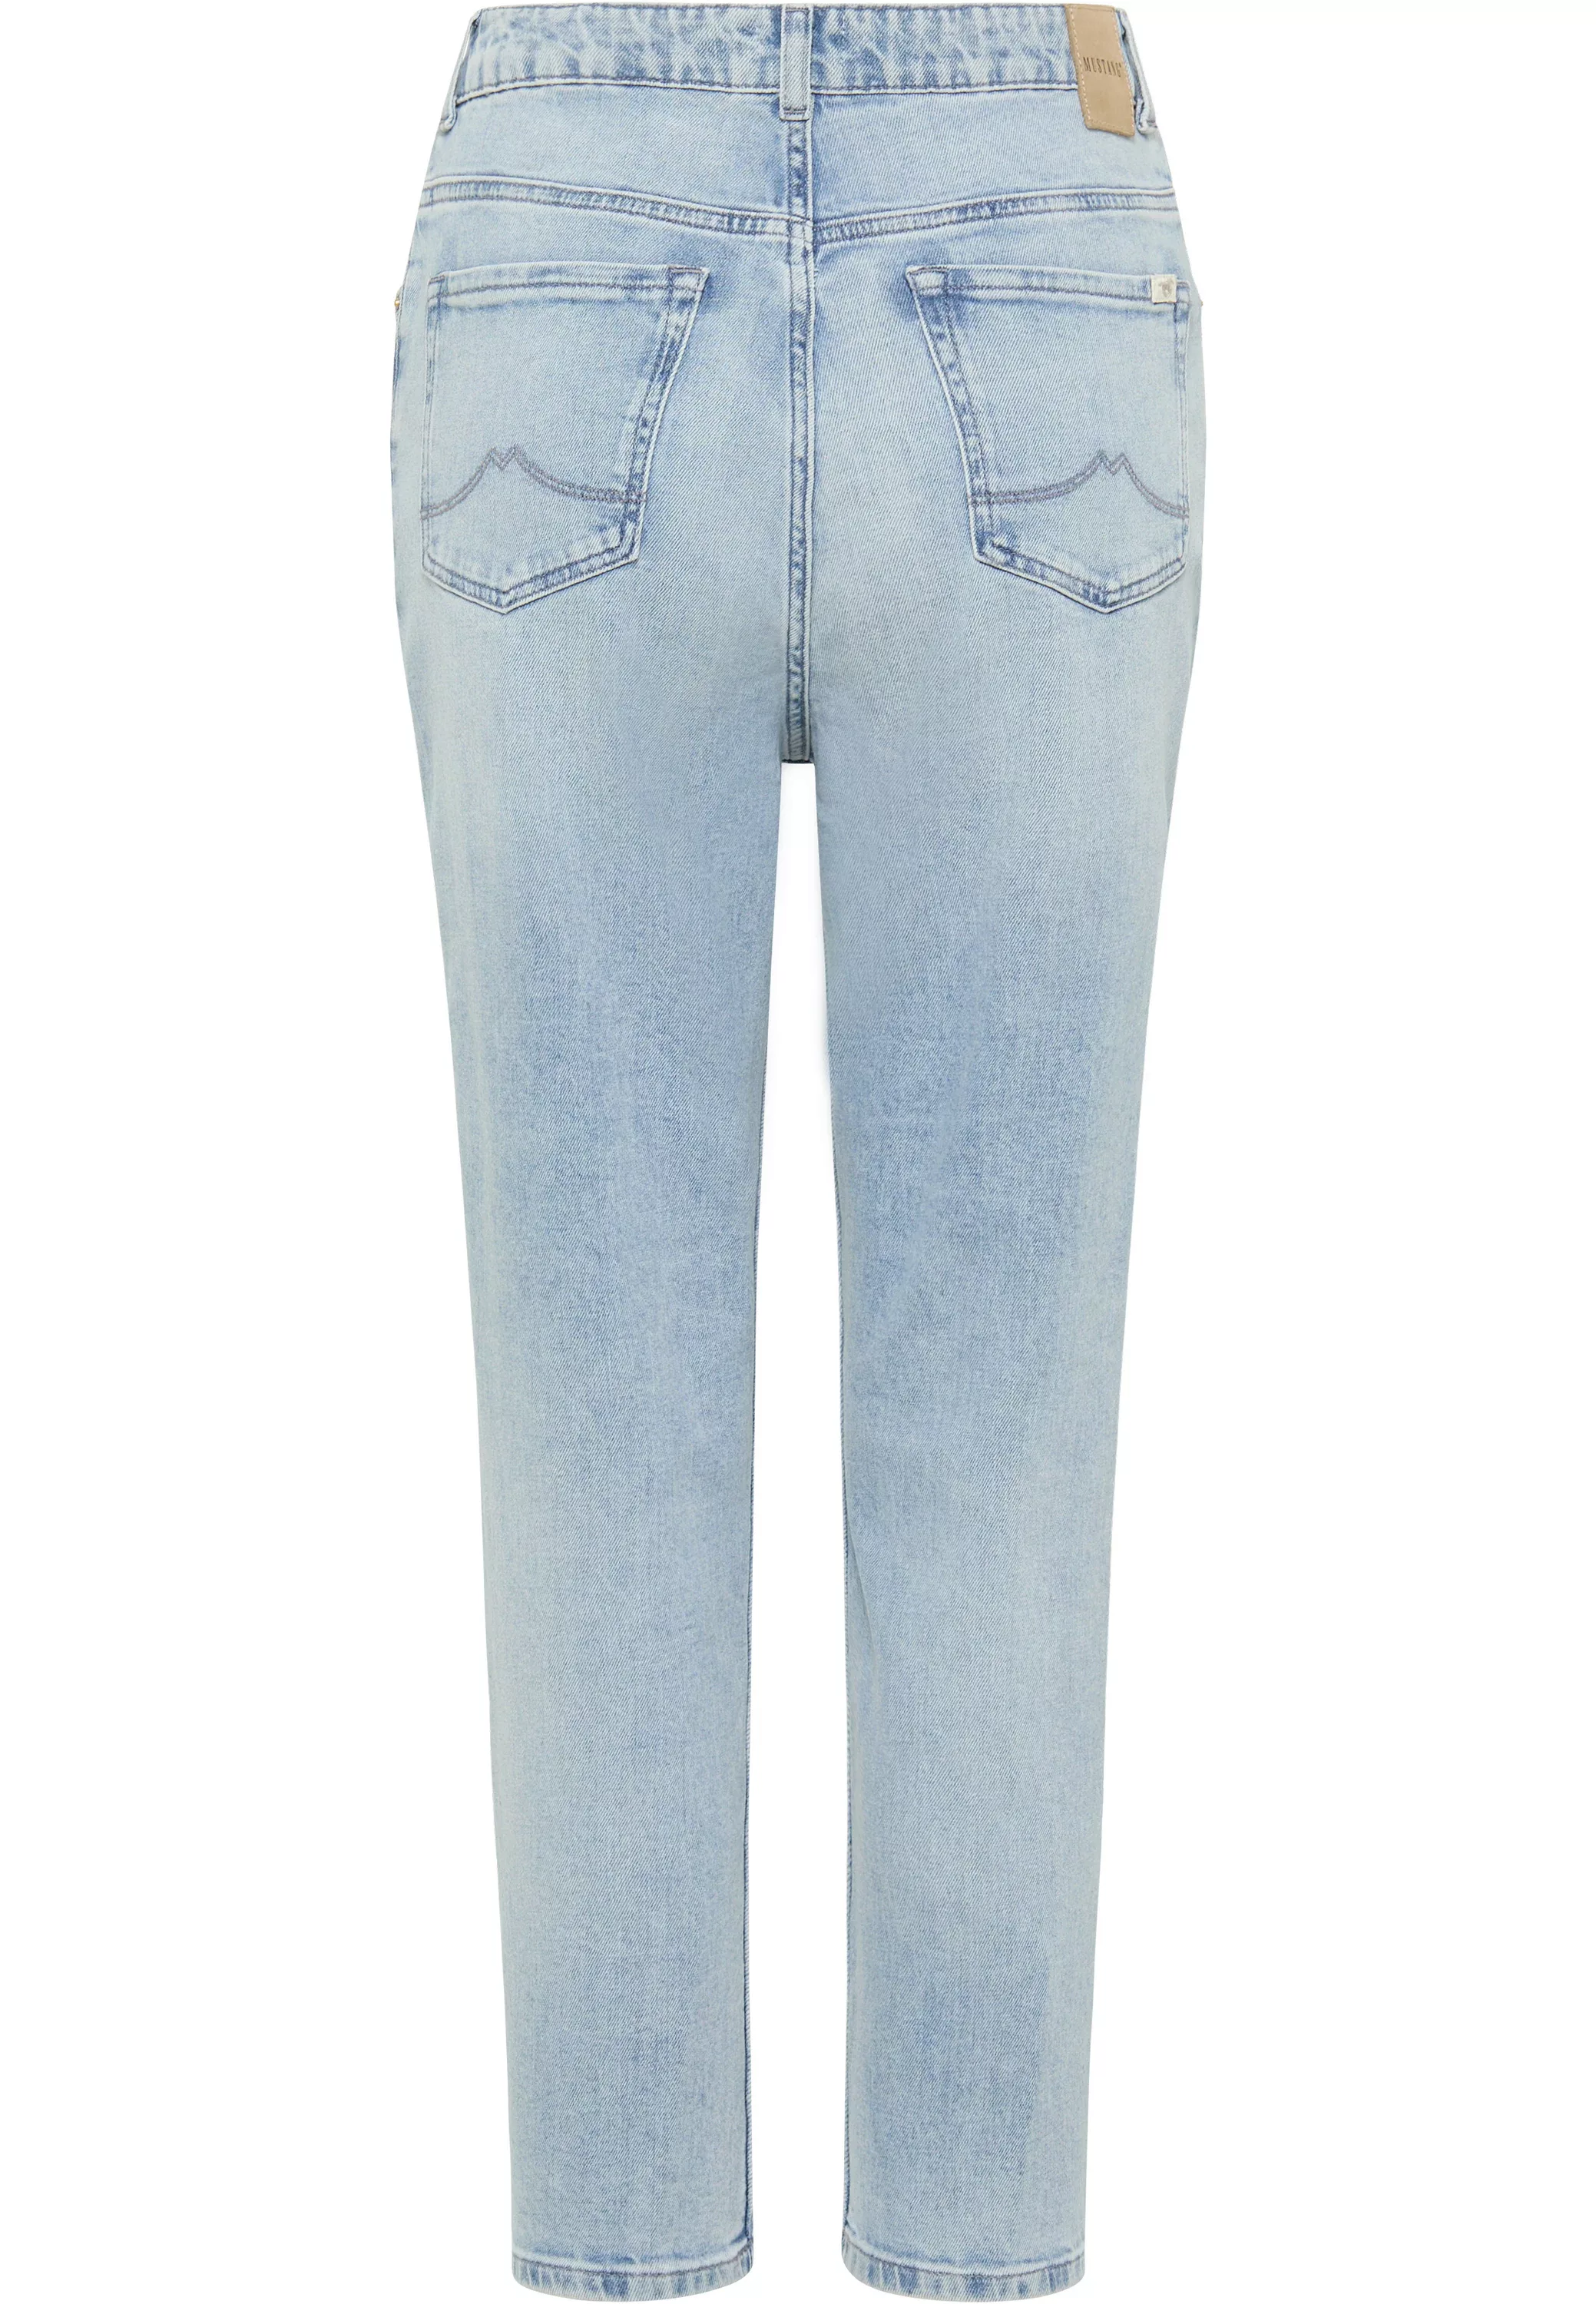 MUSTANG Mom-Jeans "Style Charlotte Tapered" günstig online kaufen